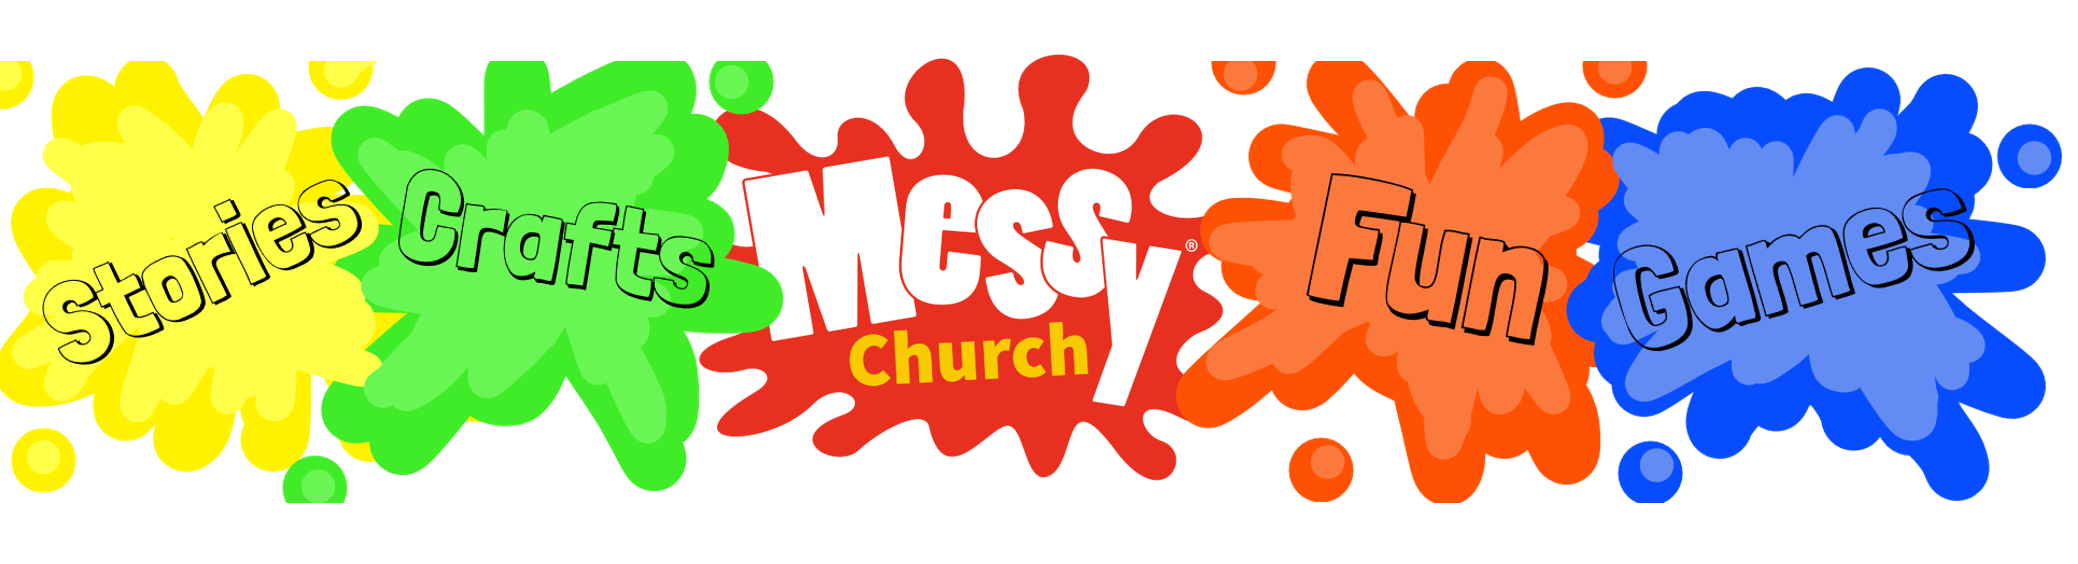 messy church banner image